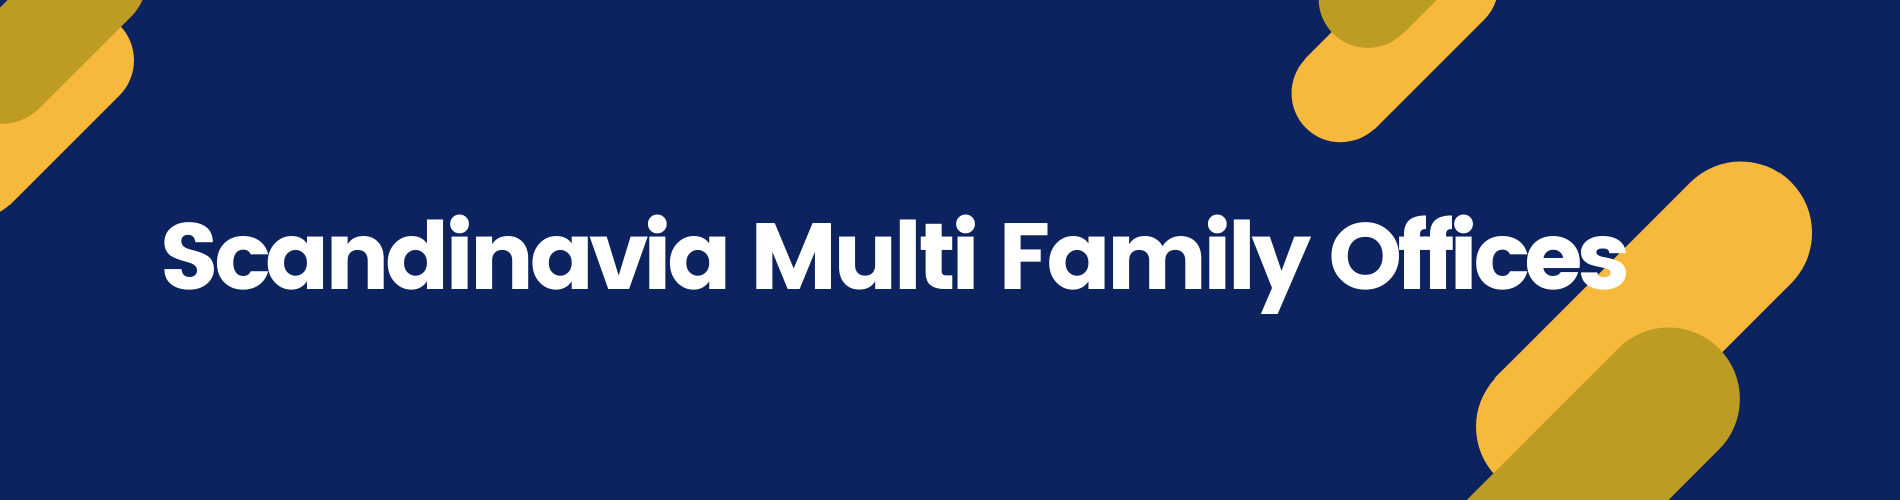 Multi Family Offices Scandinavia